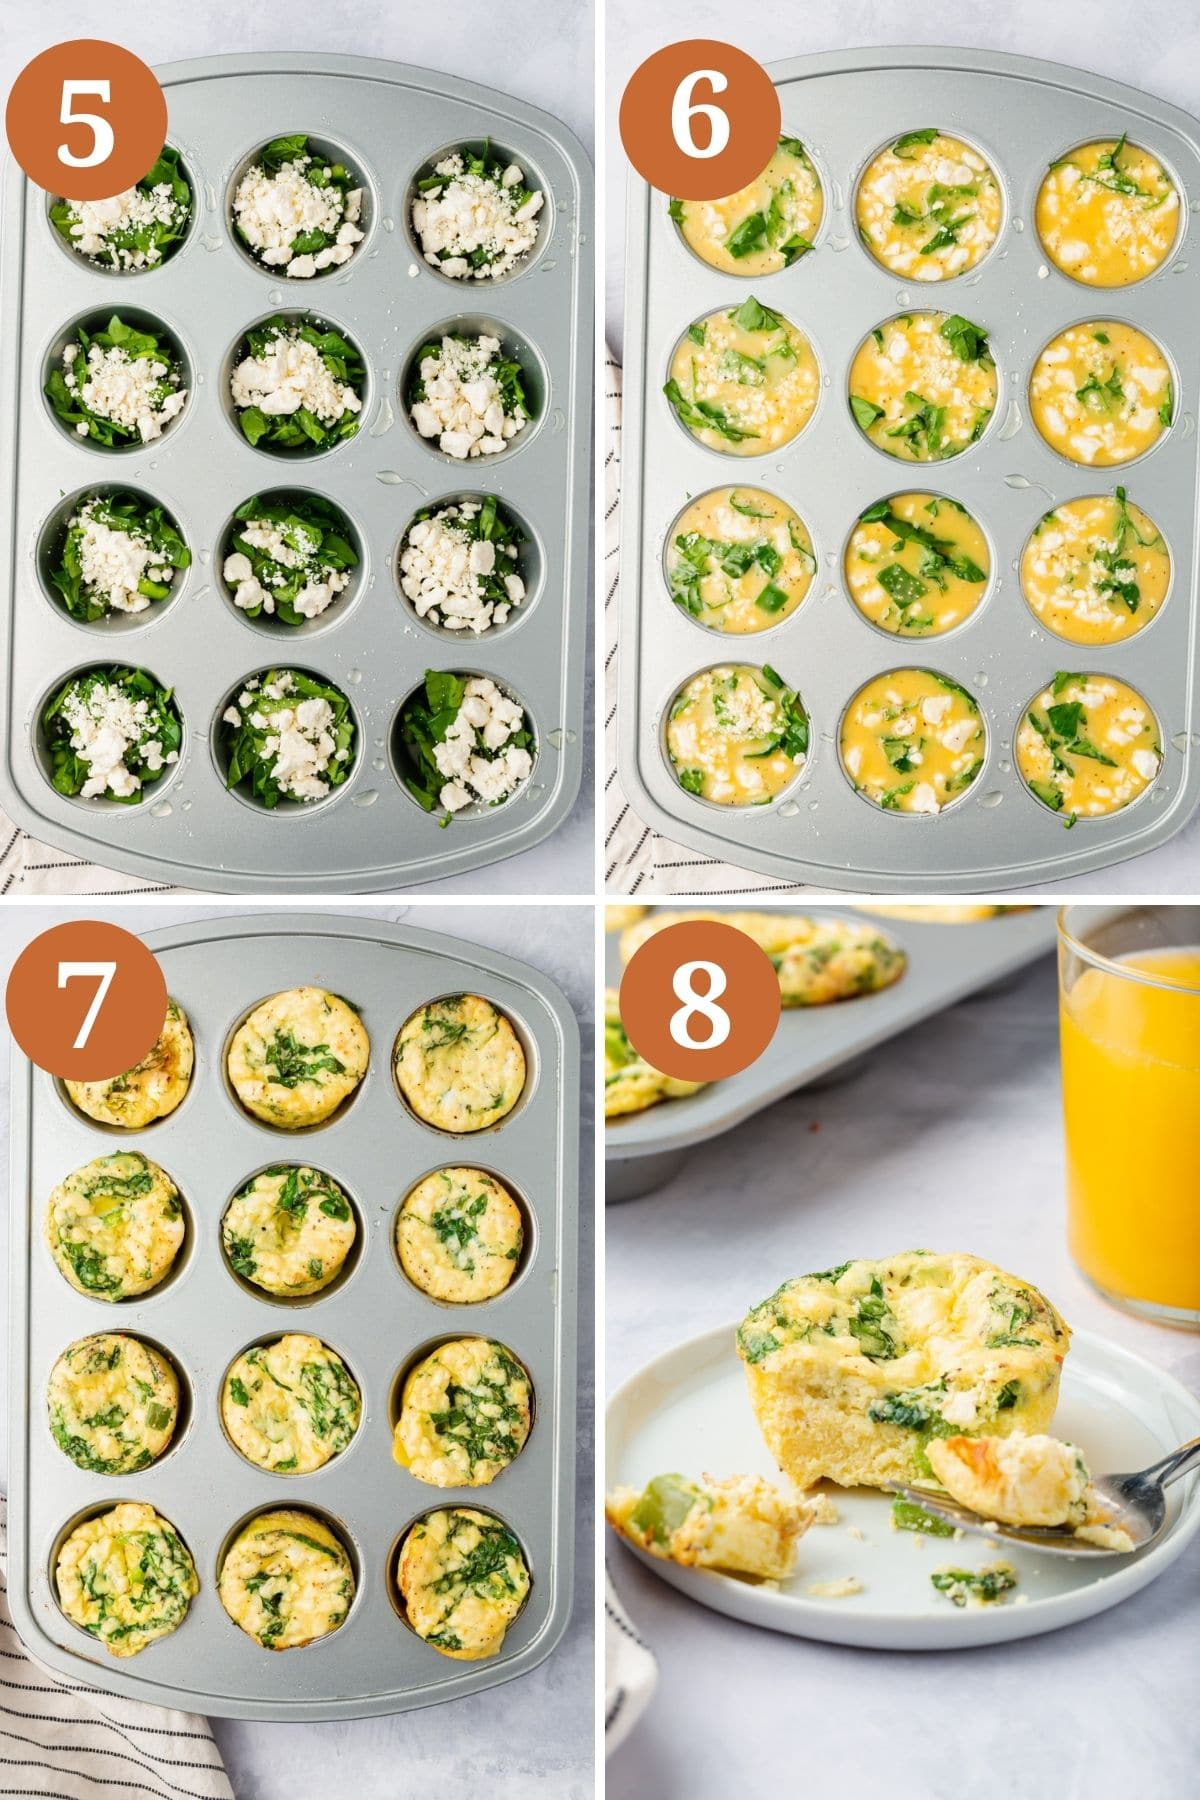 Steps 5-8 for making spinach feta egg muffins.